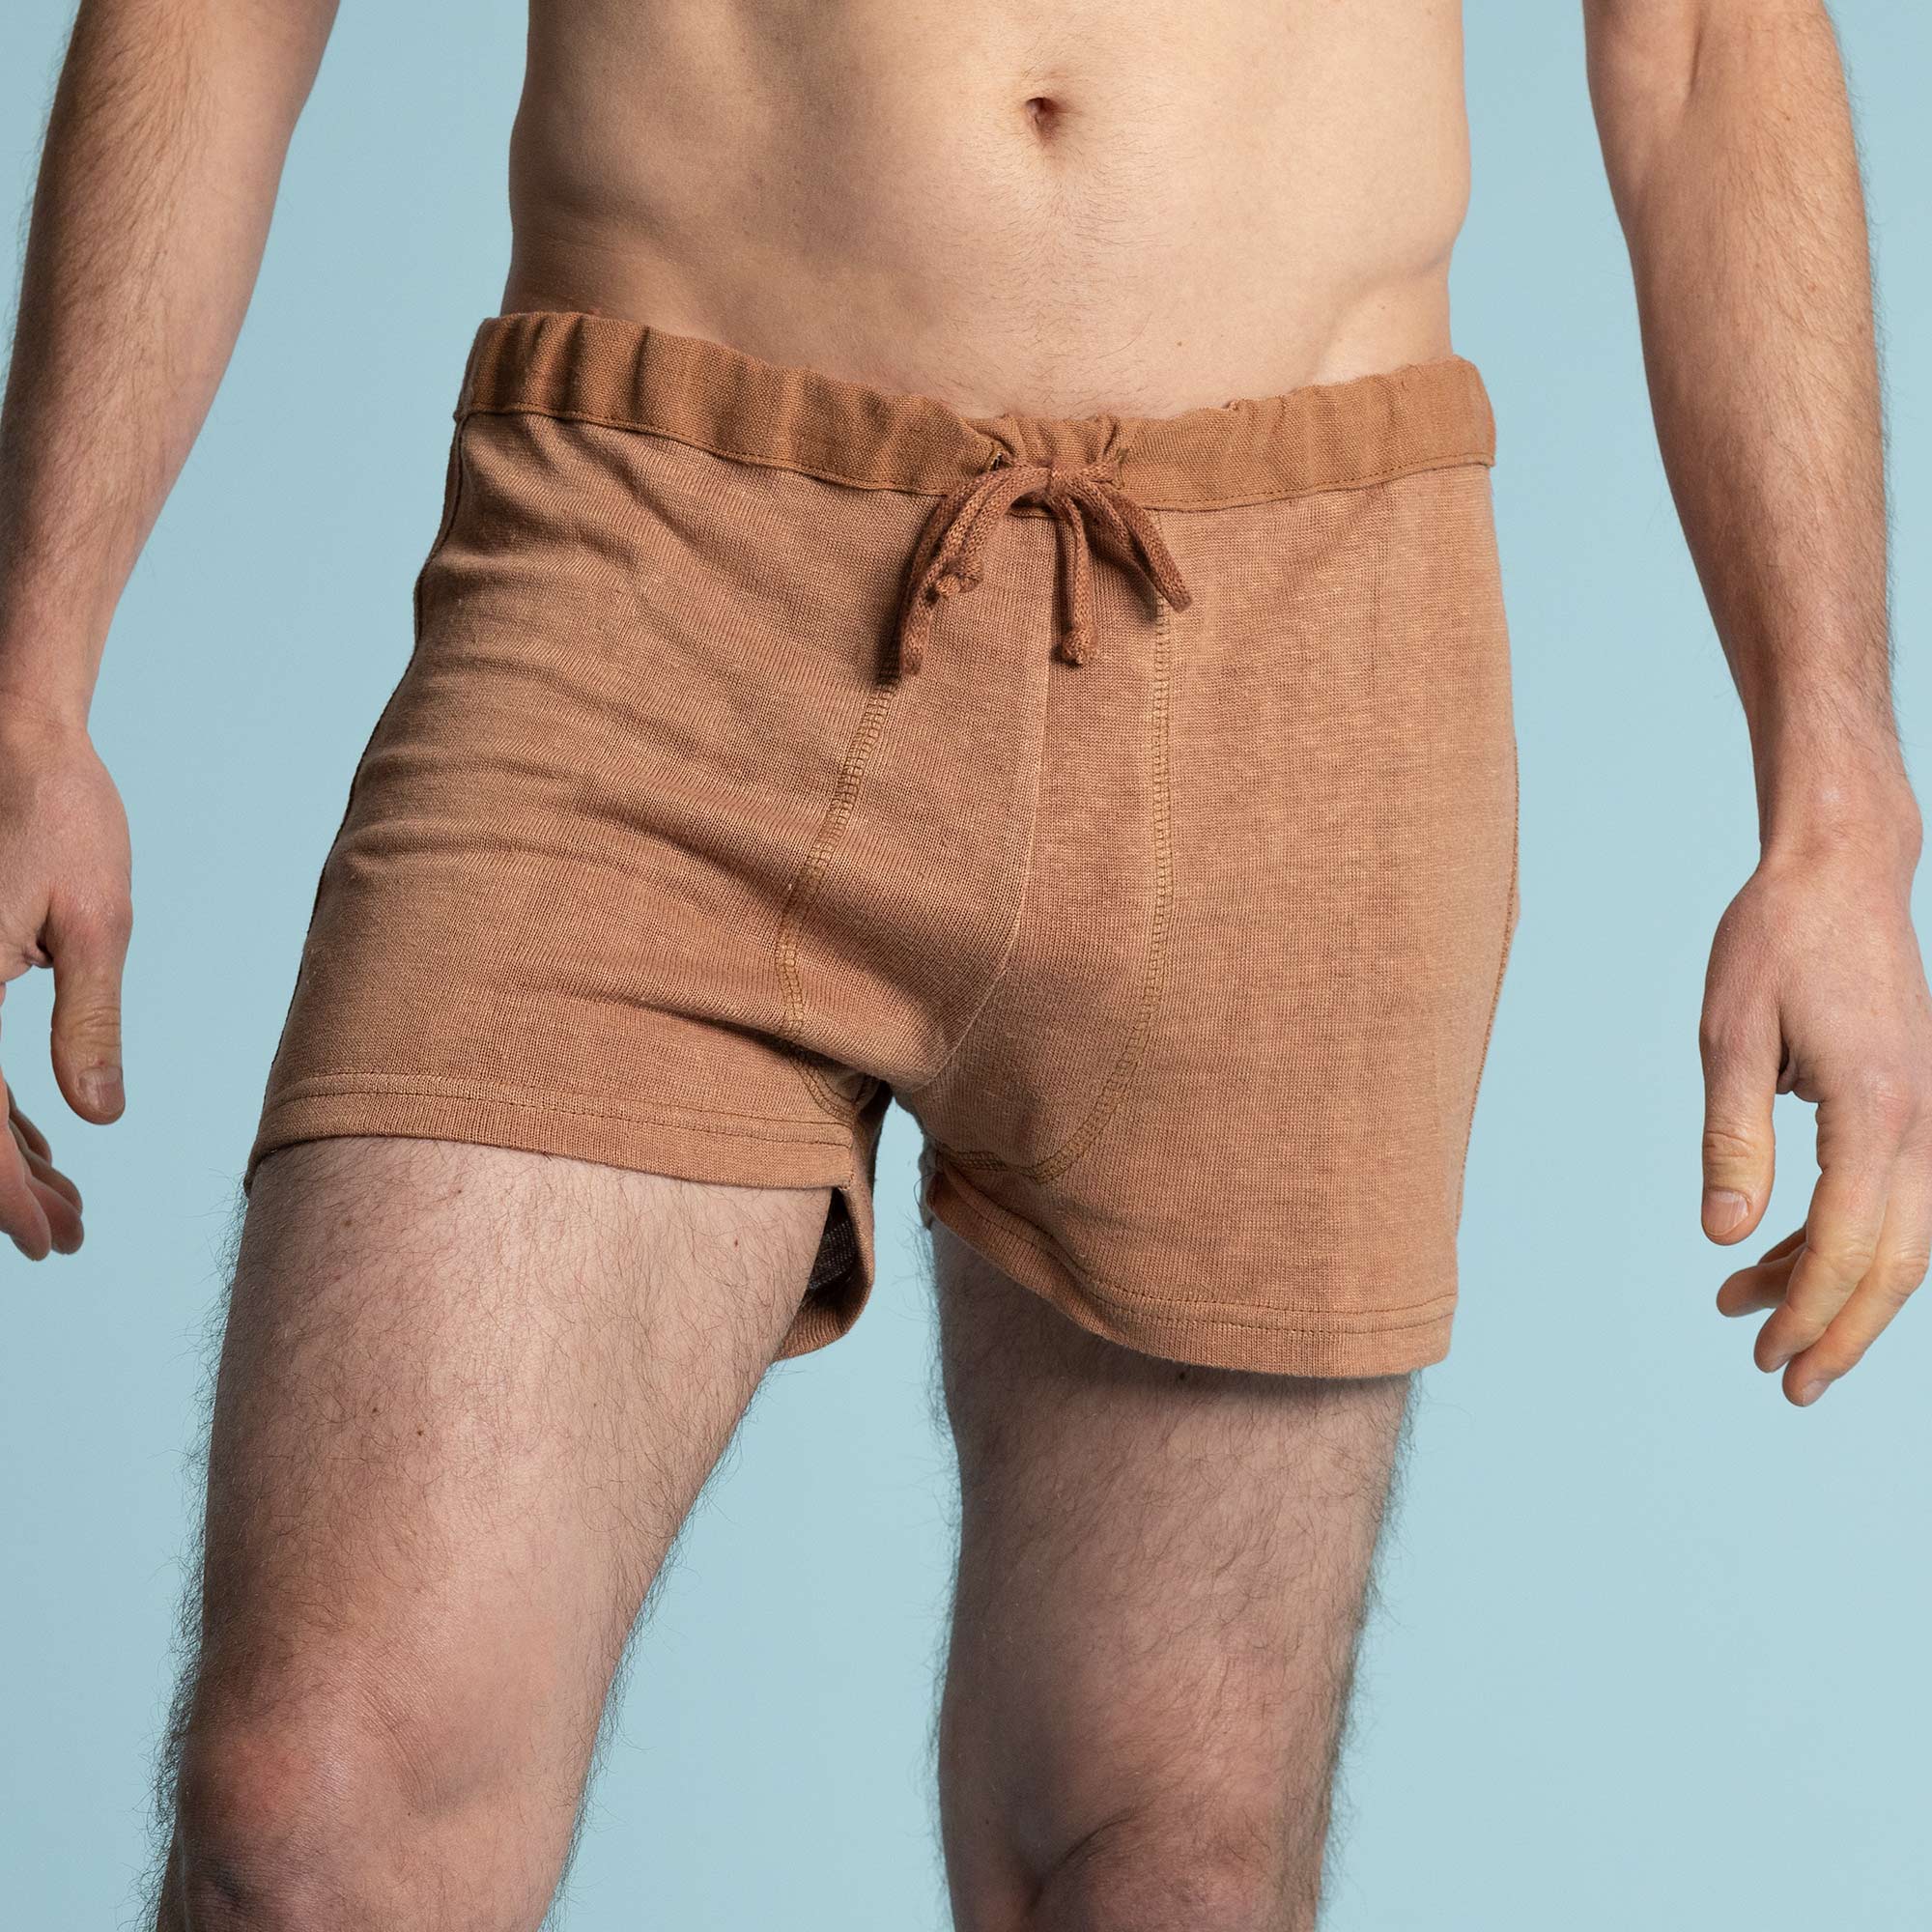 100% Organic Cotton Men's Drawstring Boxers - Elastic Free Briefs